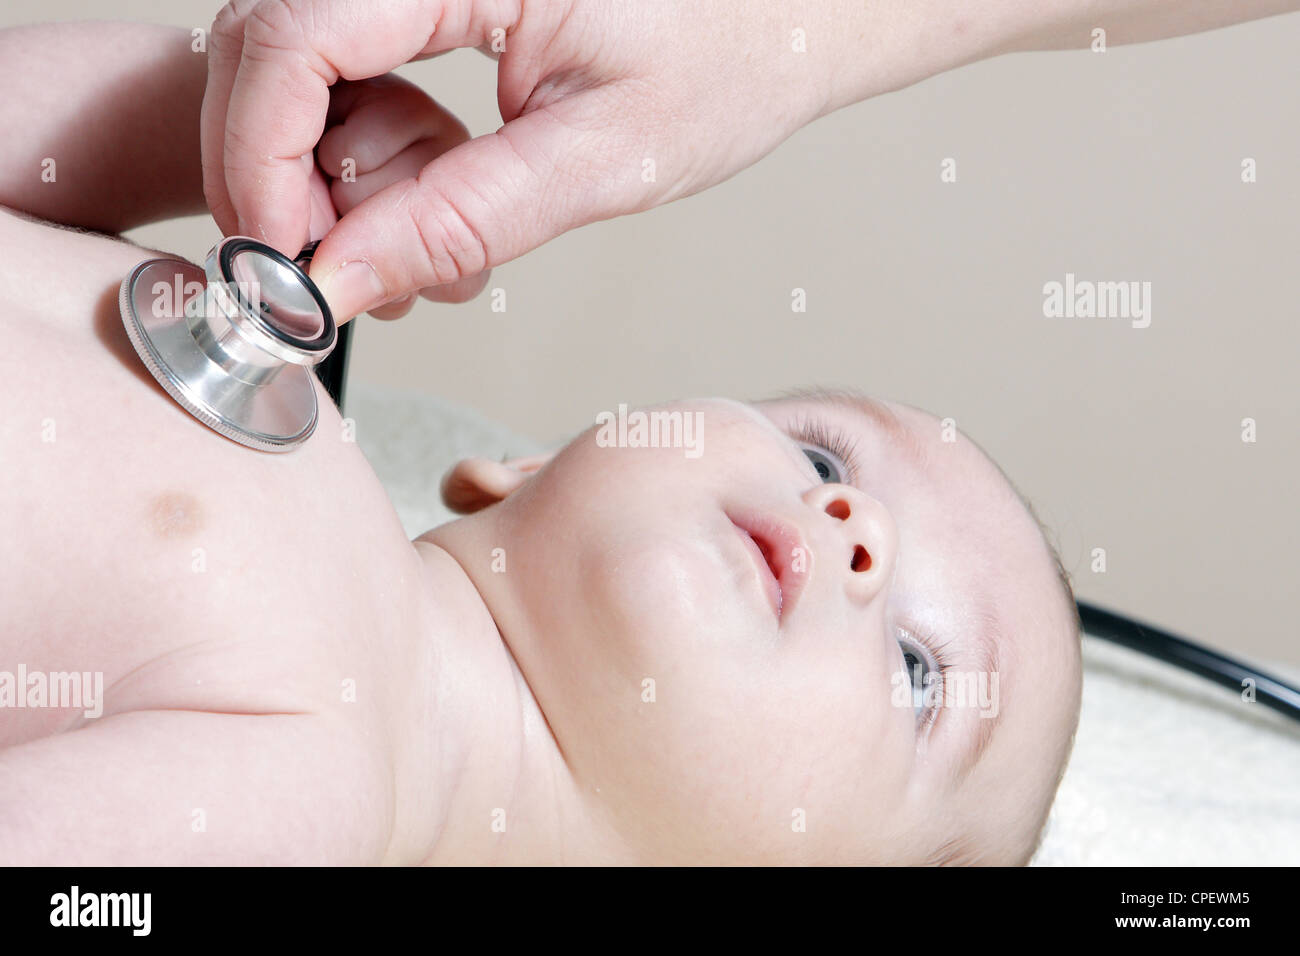 Stethoskop Herzschlag des Babys hören Stockfotografie - Alamy